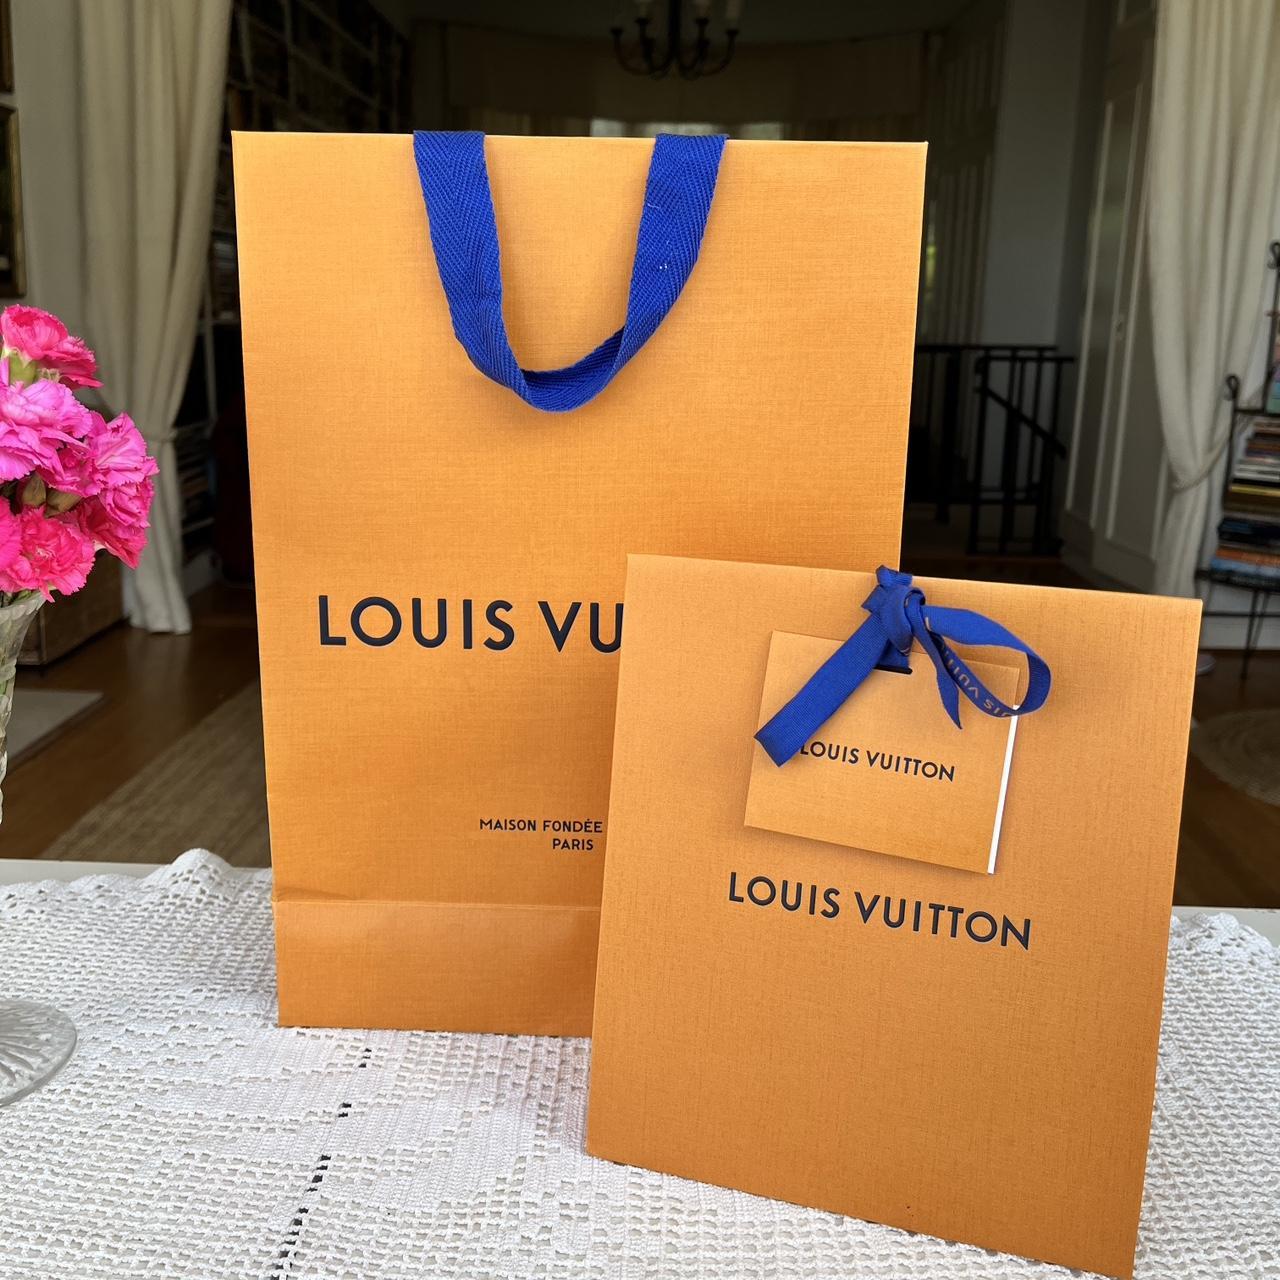 Louis Vuitton Gift Box Malletier A Paris Maison Fondee En 1854 w/ Paper  11x7x2